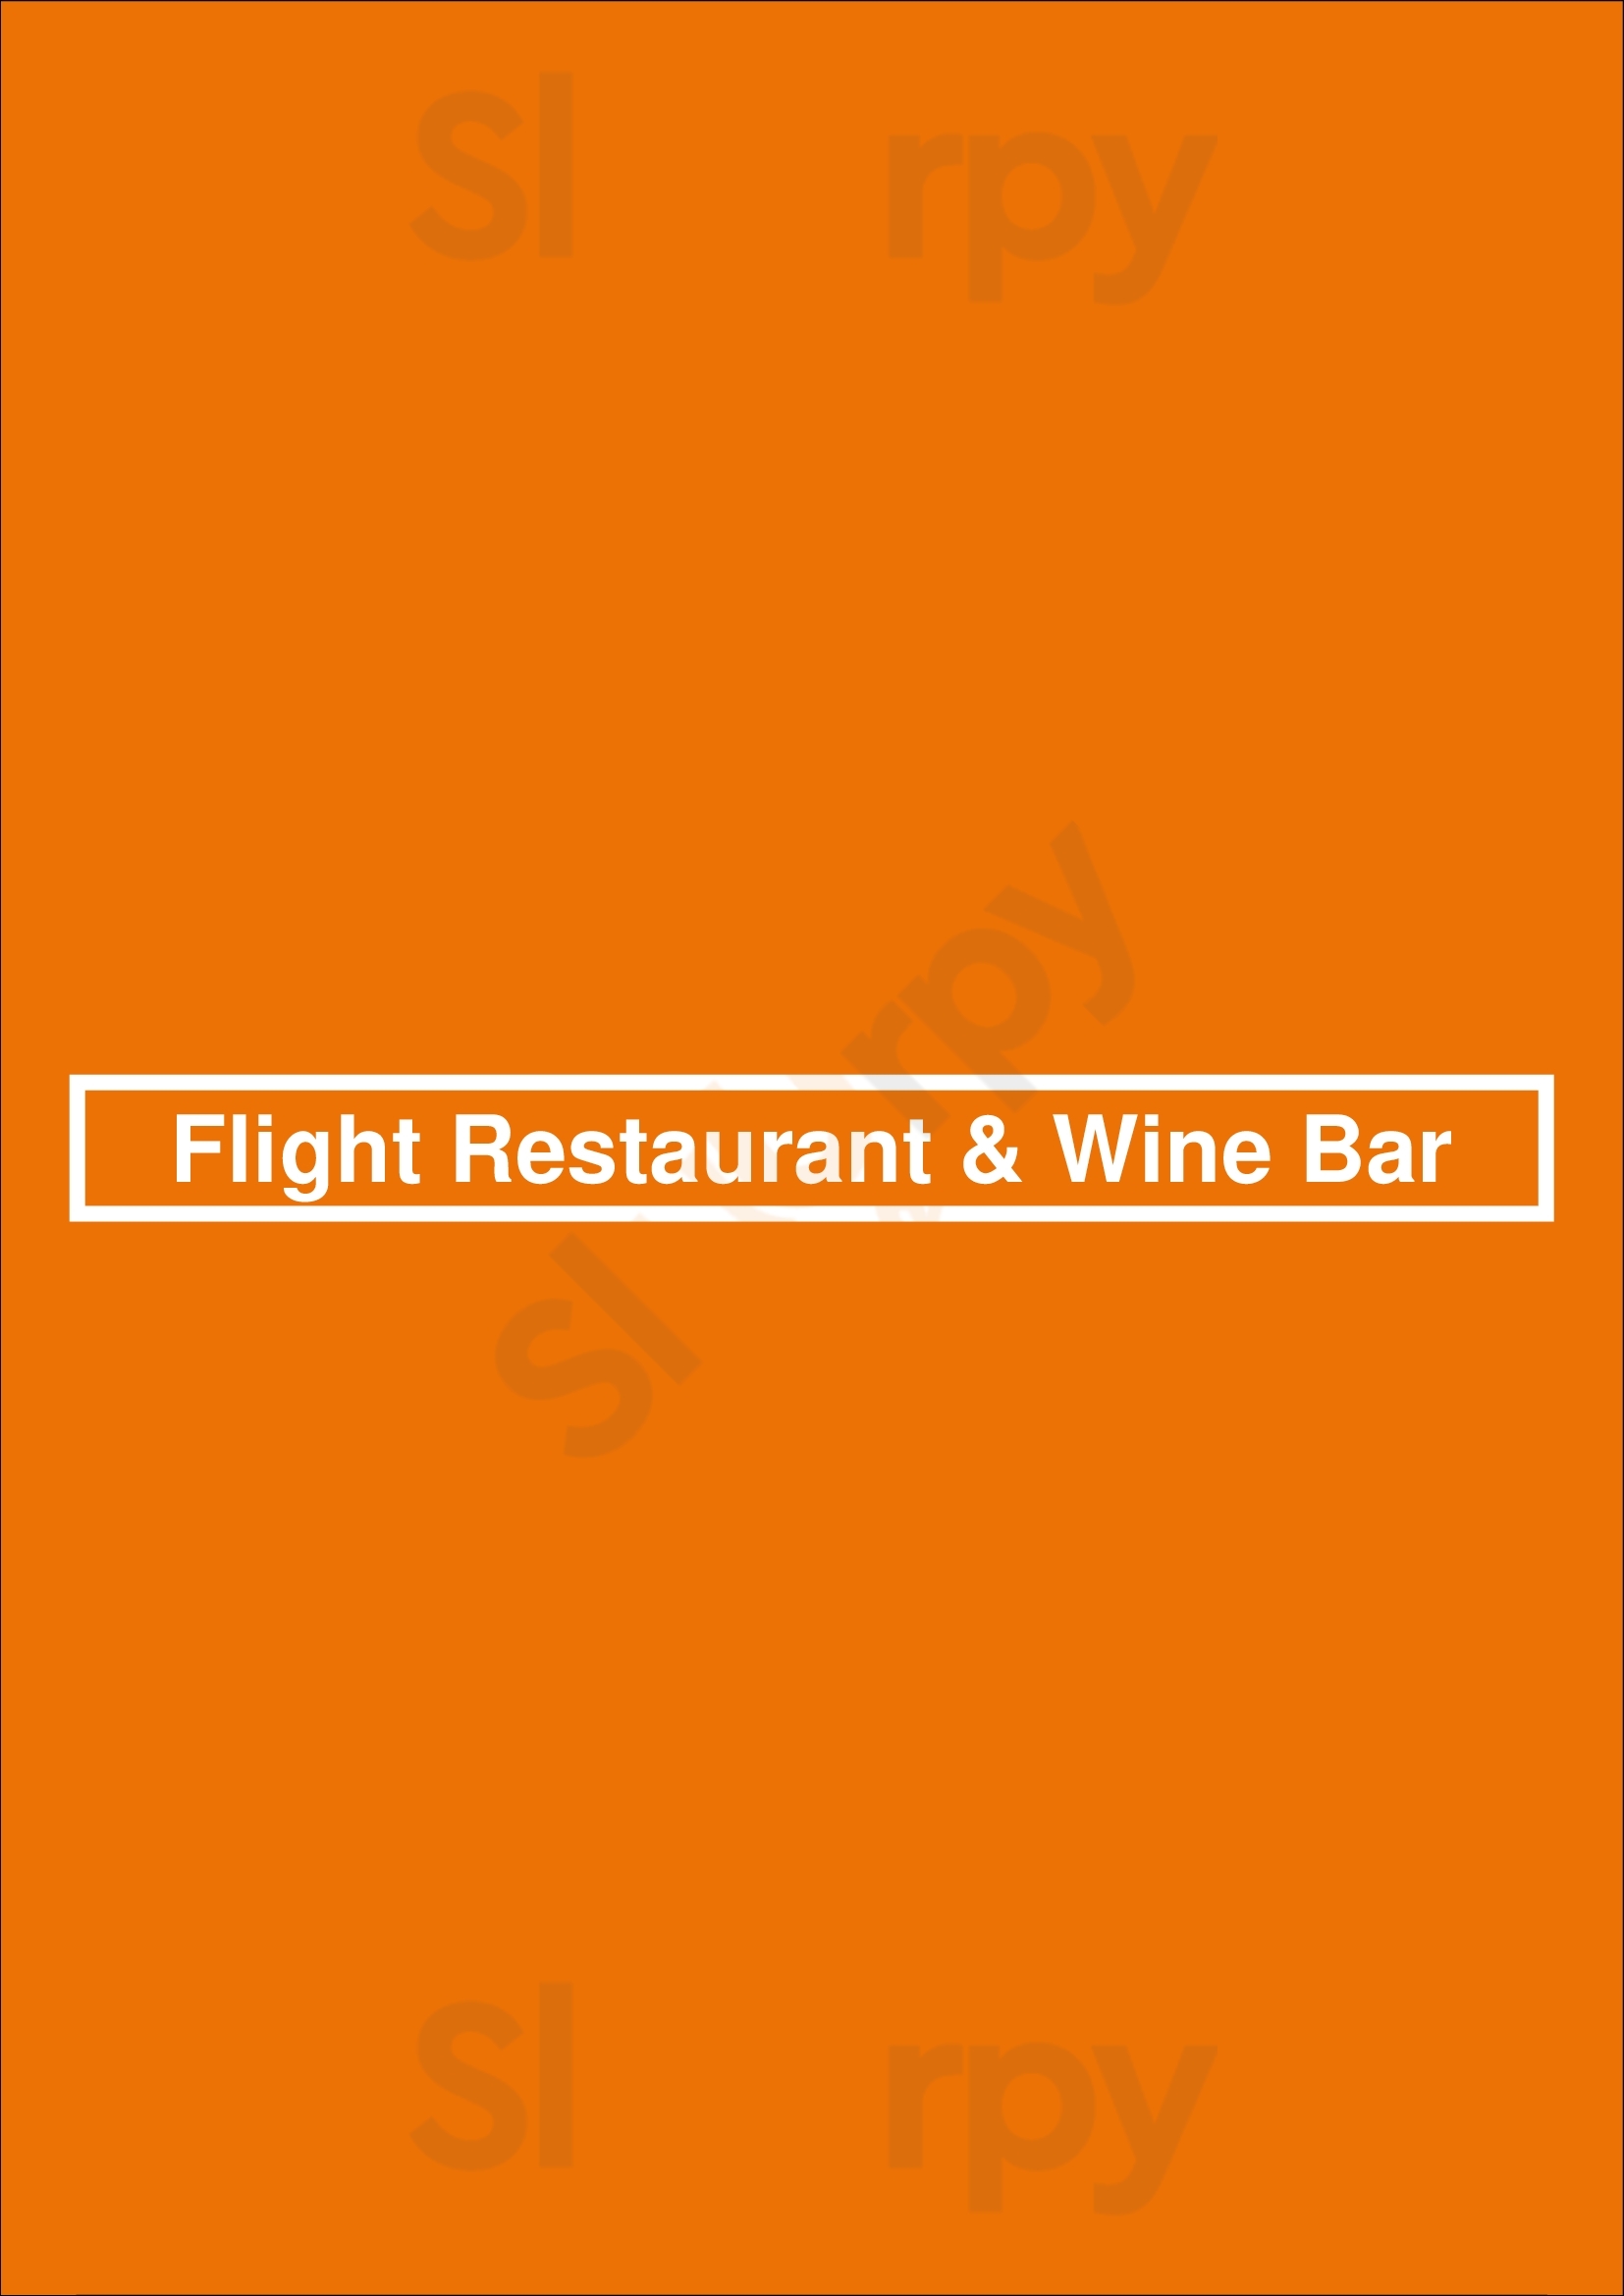 Flight Restaurant And Wine Bar Memphis Menu - 1